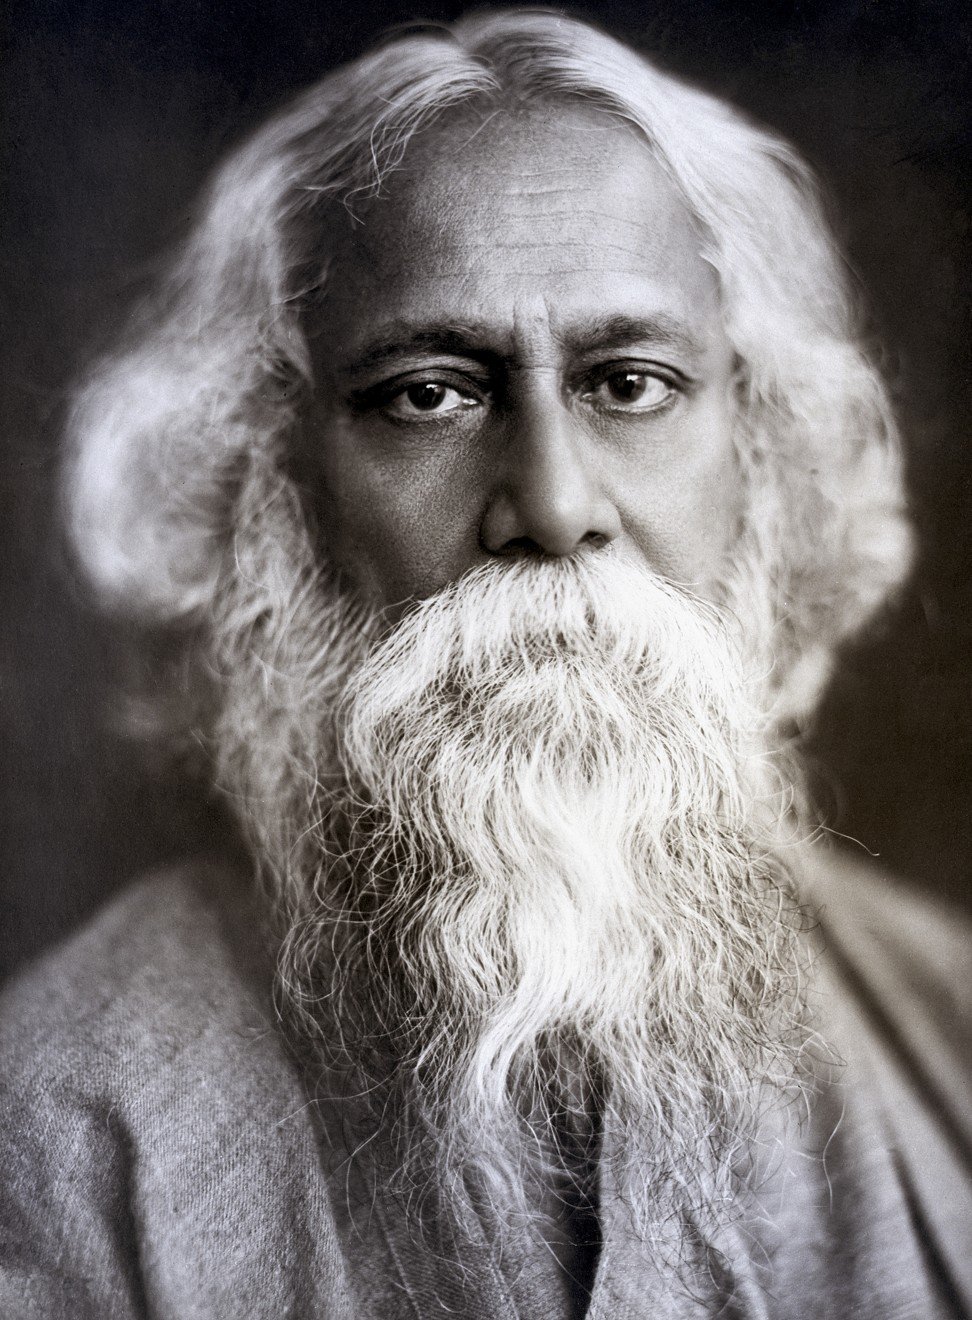 Rabrindranth Tagore, Indian poet, author and philosopher. Photo: Bettmann/CORBIS